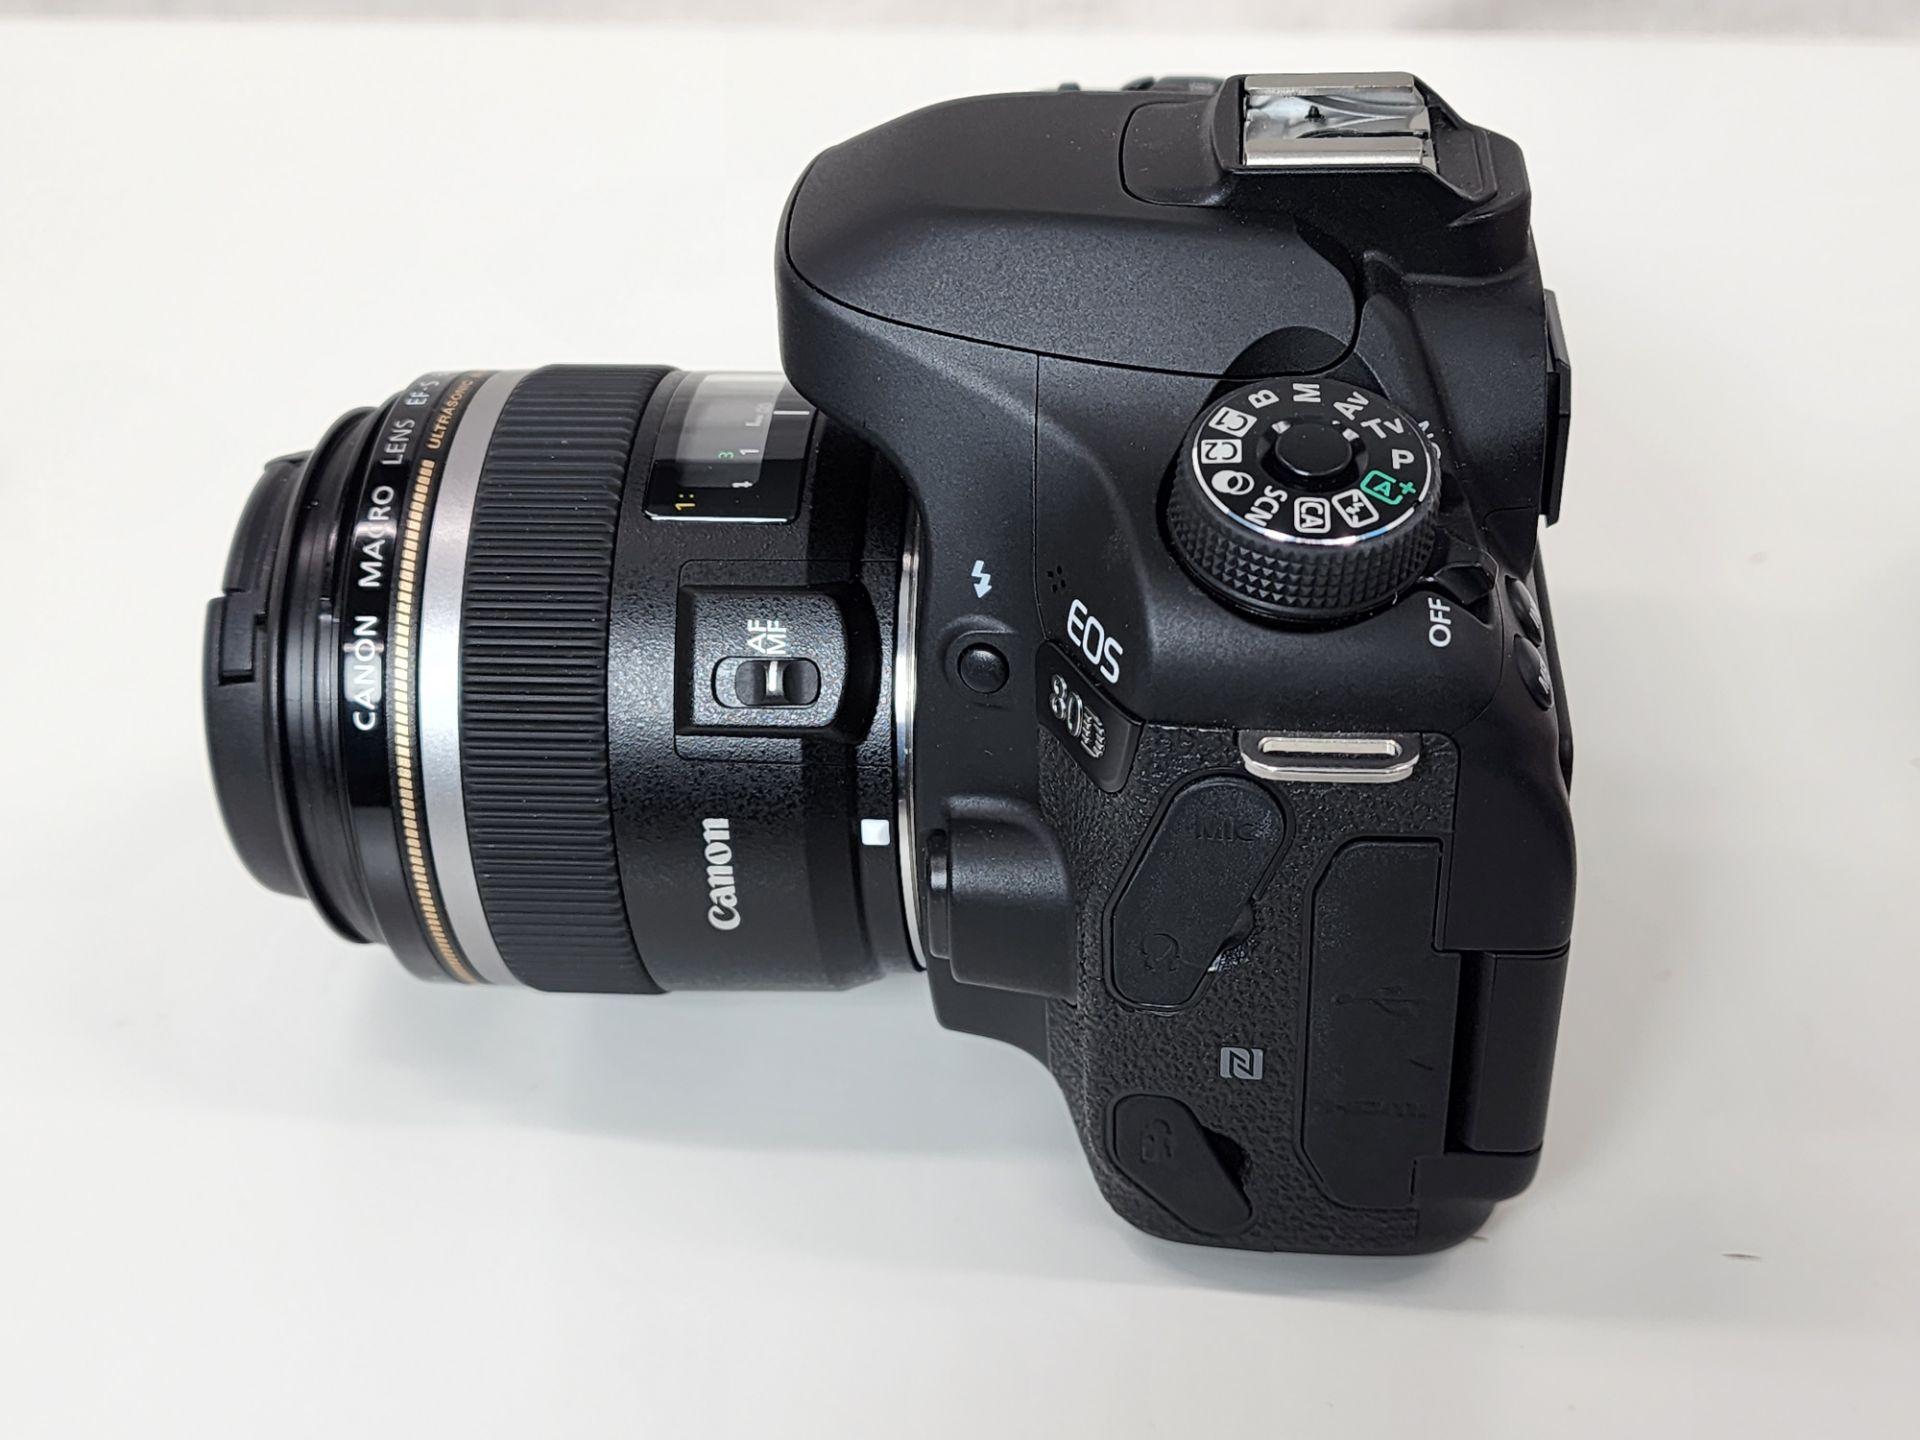 Canon Model EOS 80D (W) DSLR Camera Body, 24.2 Mega Pixel, Dual Pixel CMOS AF, Cross-Type Zmac 45- - Image 5 of 14